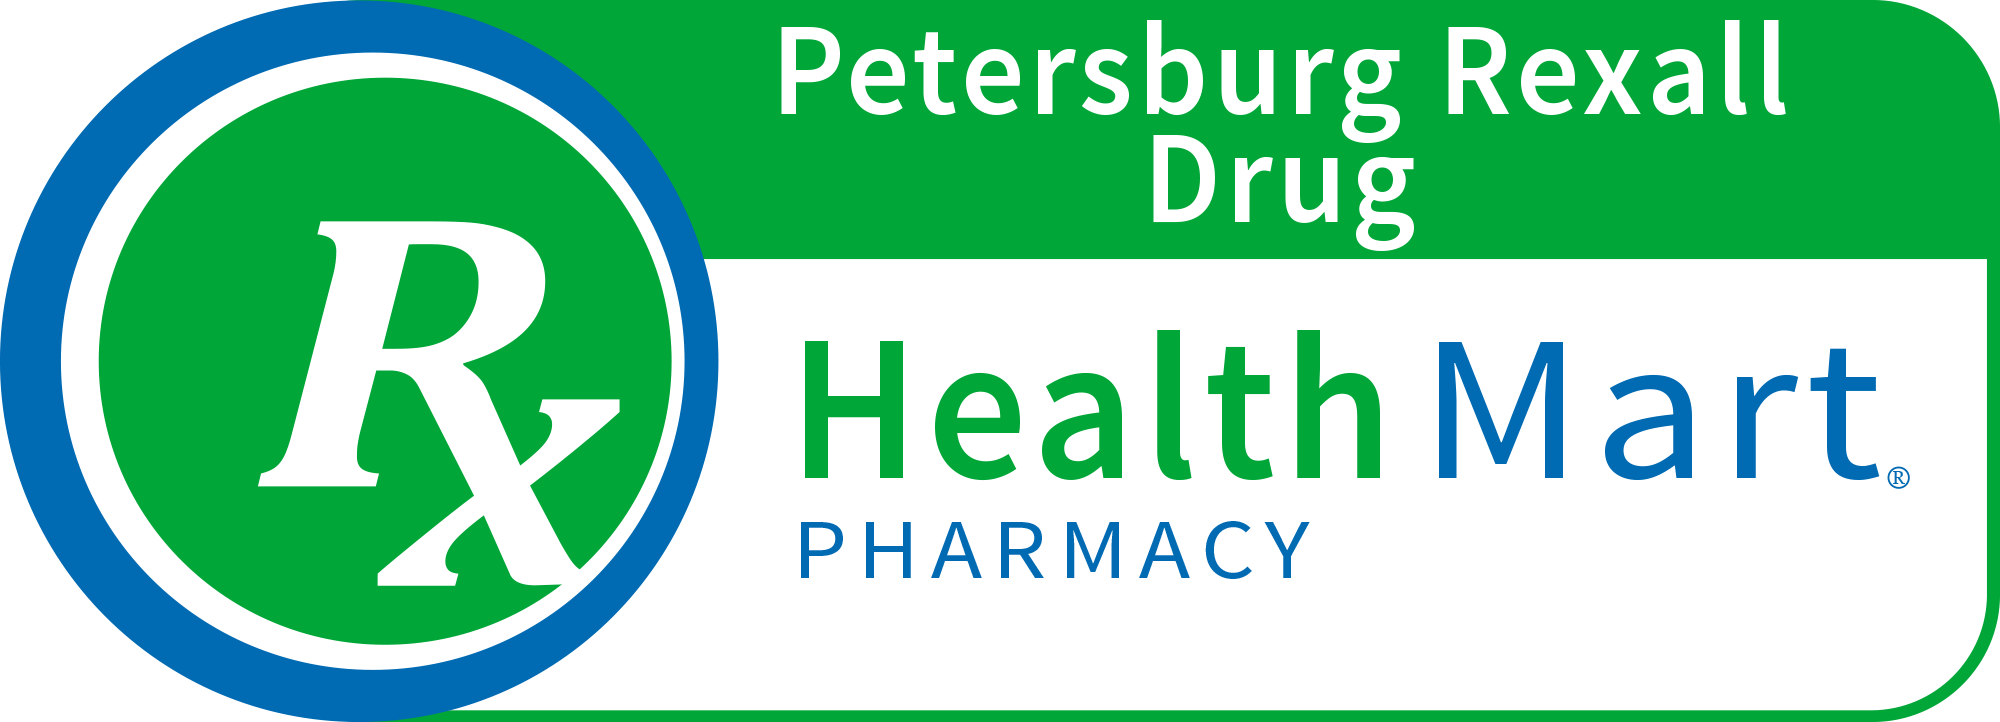 Petersburg Rexall Drug Inc